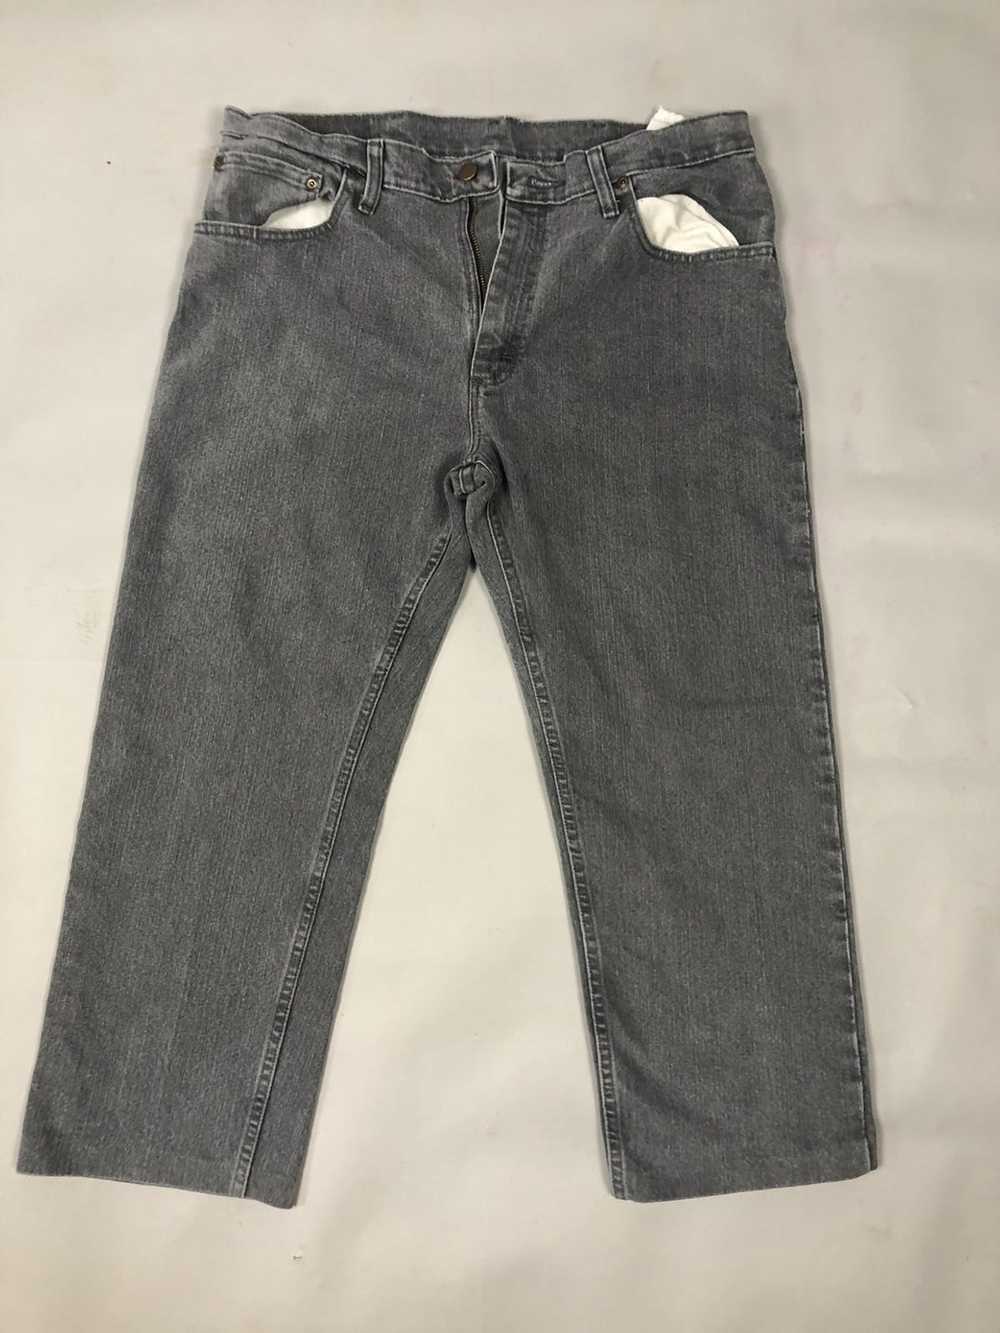 Wrangler Wrangler Premium Quality Jeans - image 1